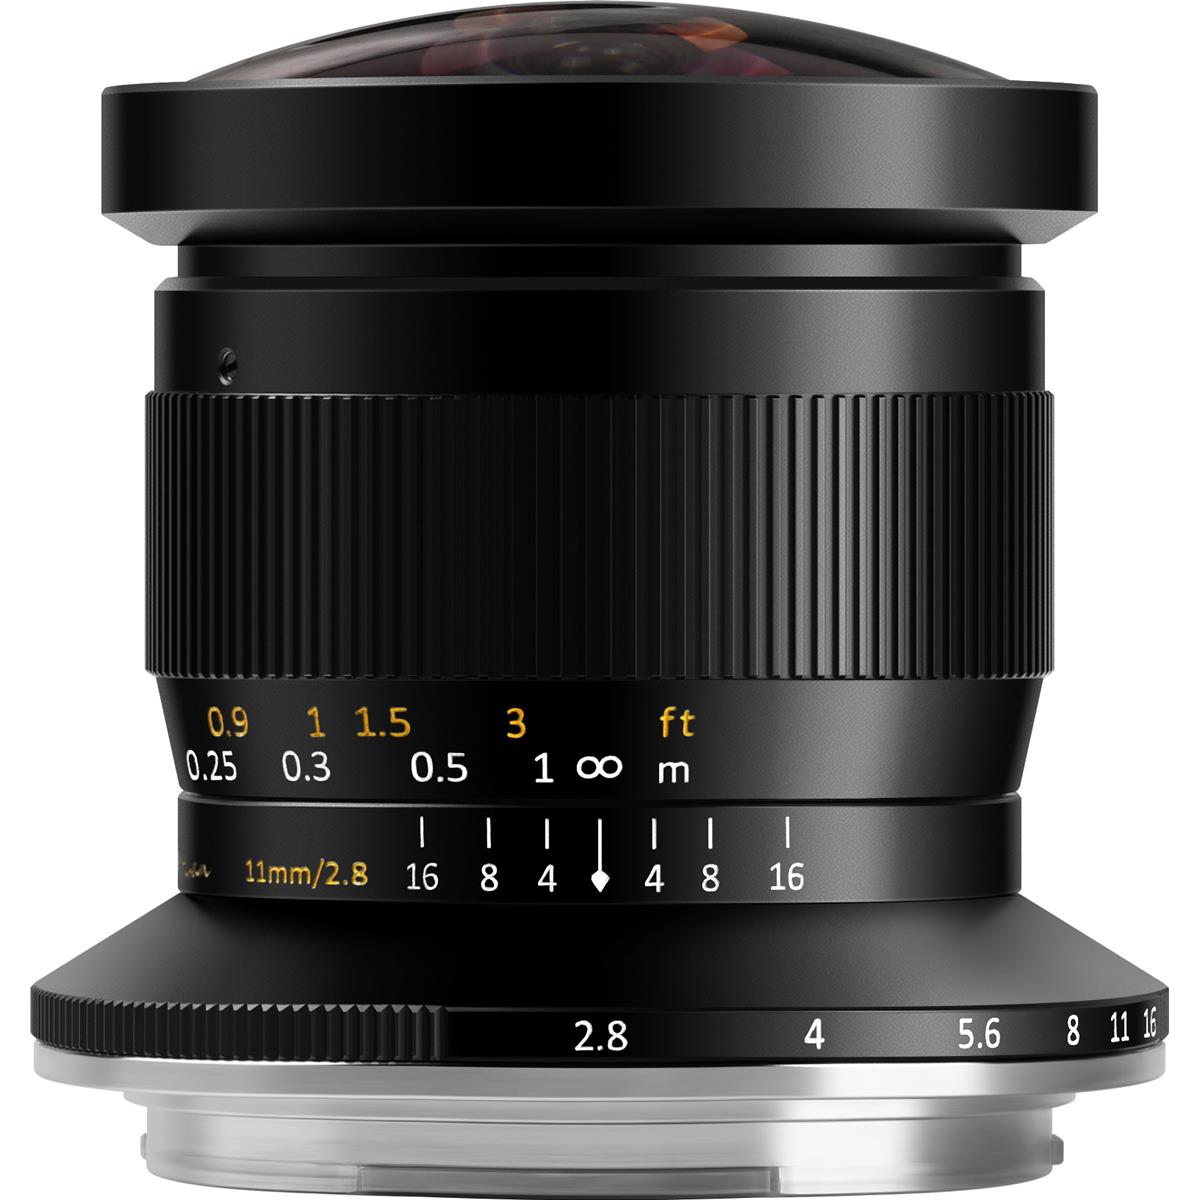 Image of TTArtisan 11mm f/2.8 Fisheye Lens for Fuji GFX